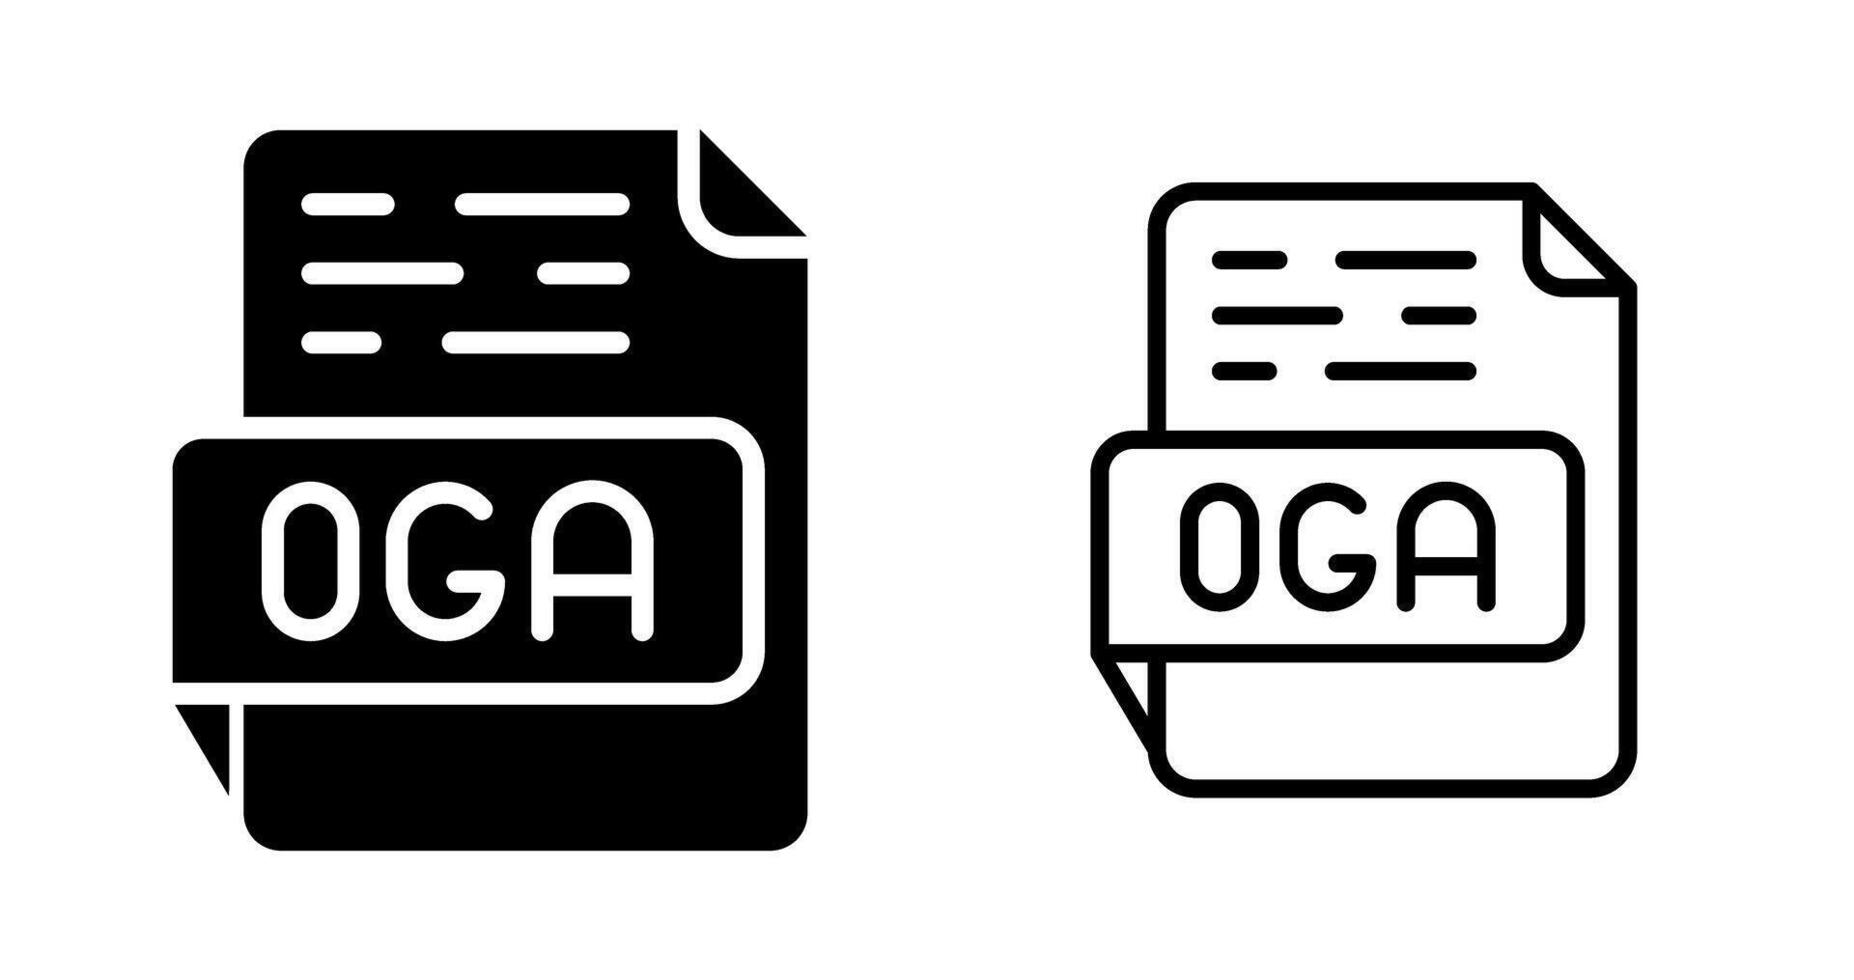 OGA Vector Icon